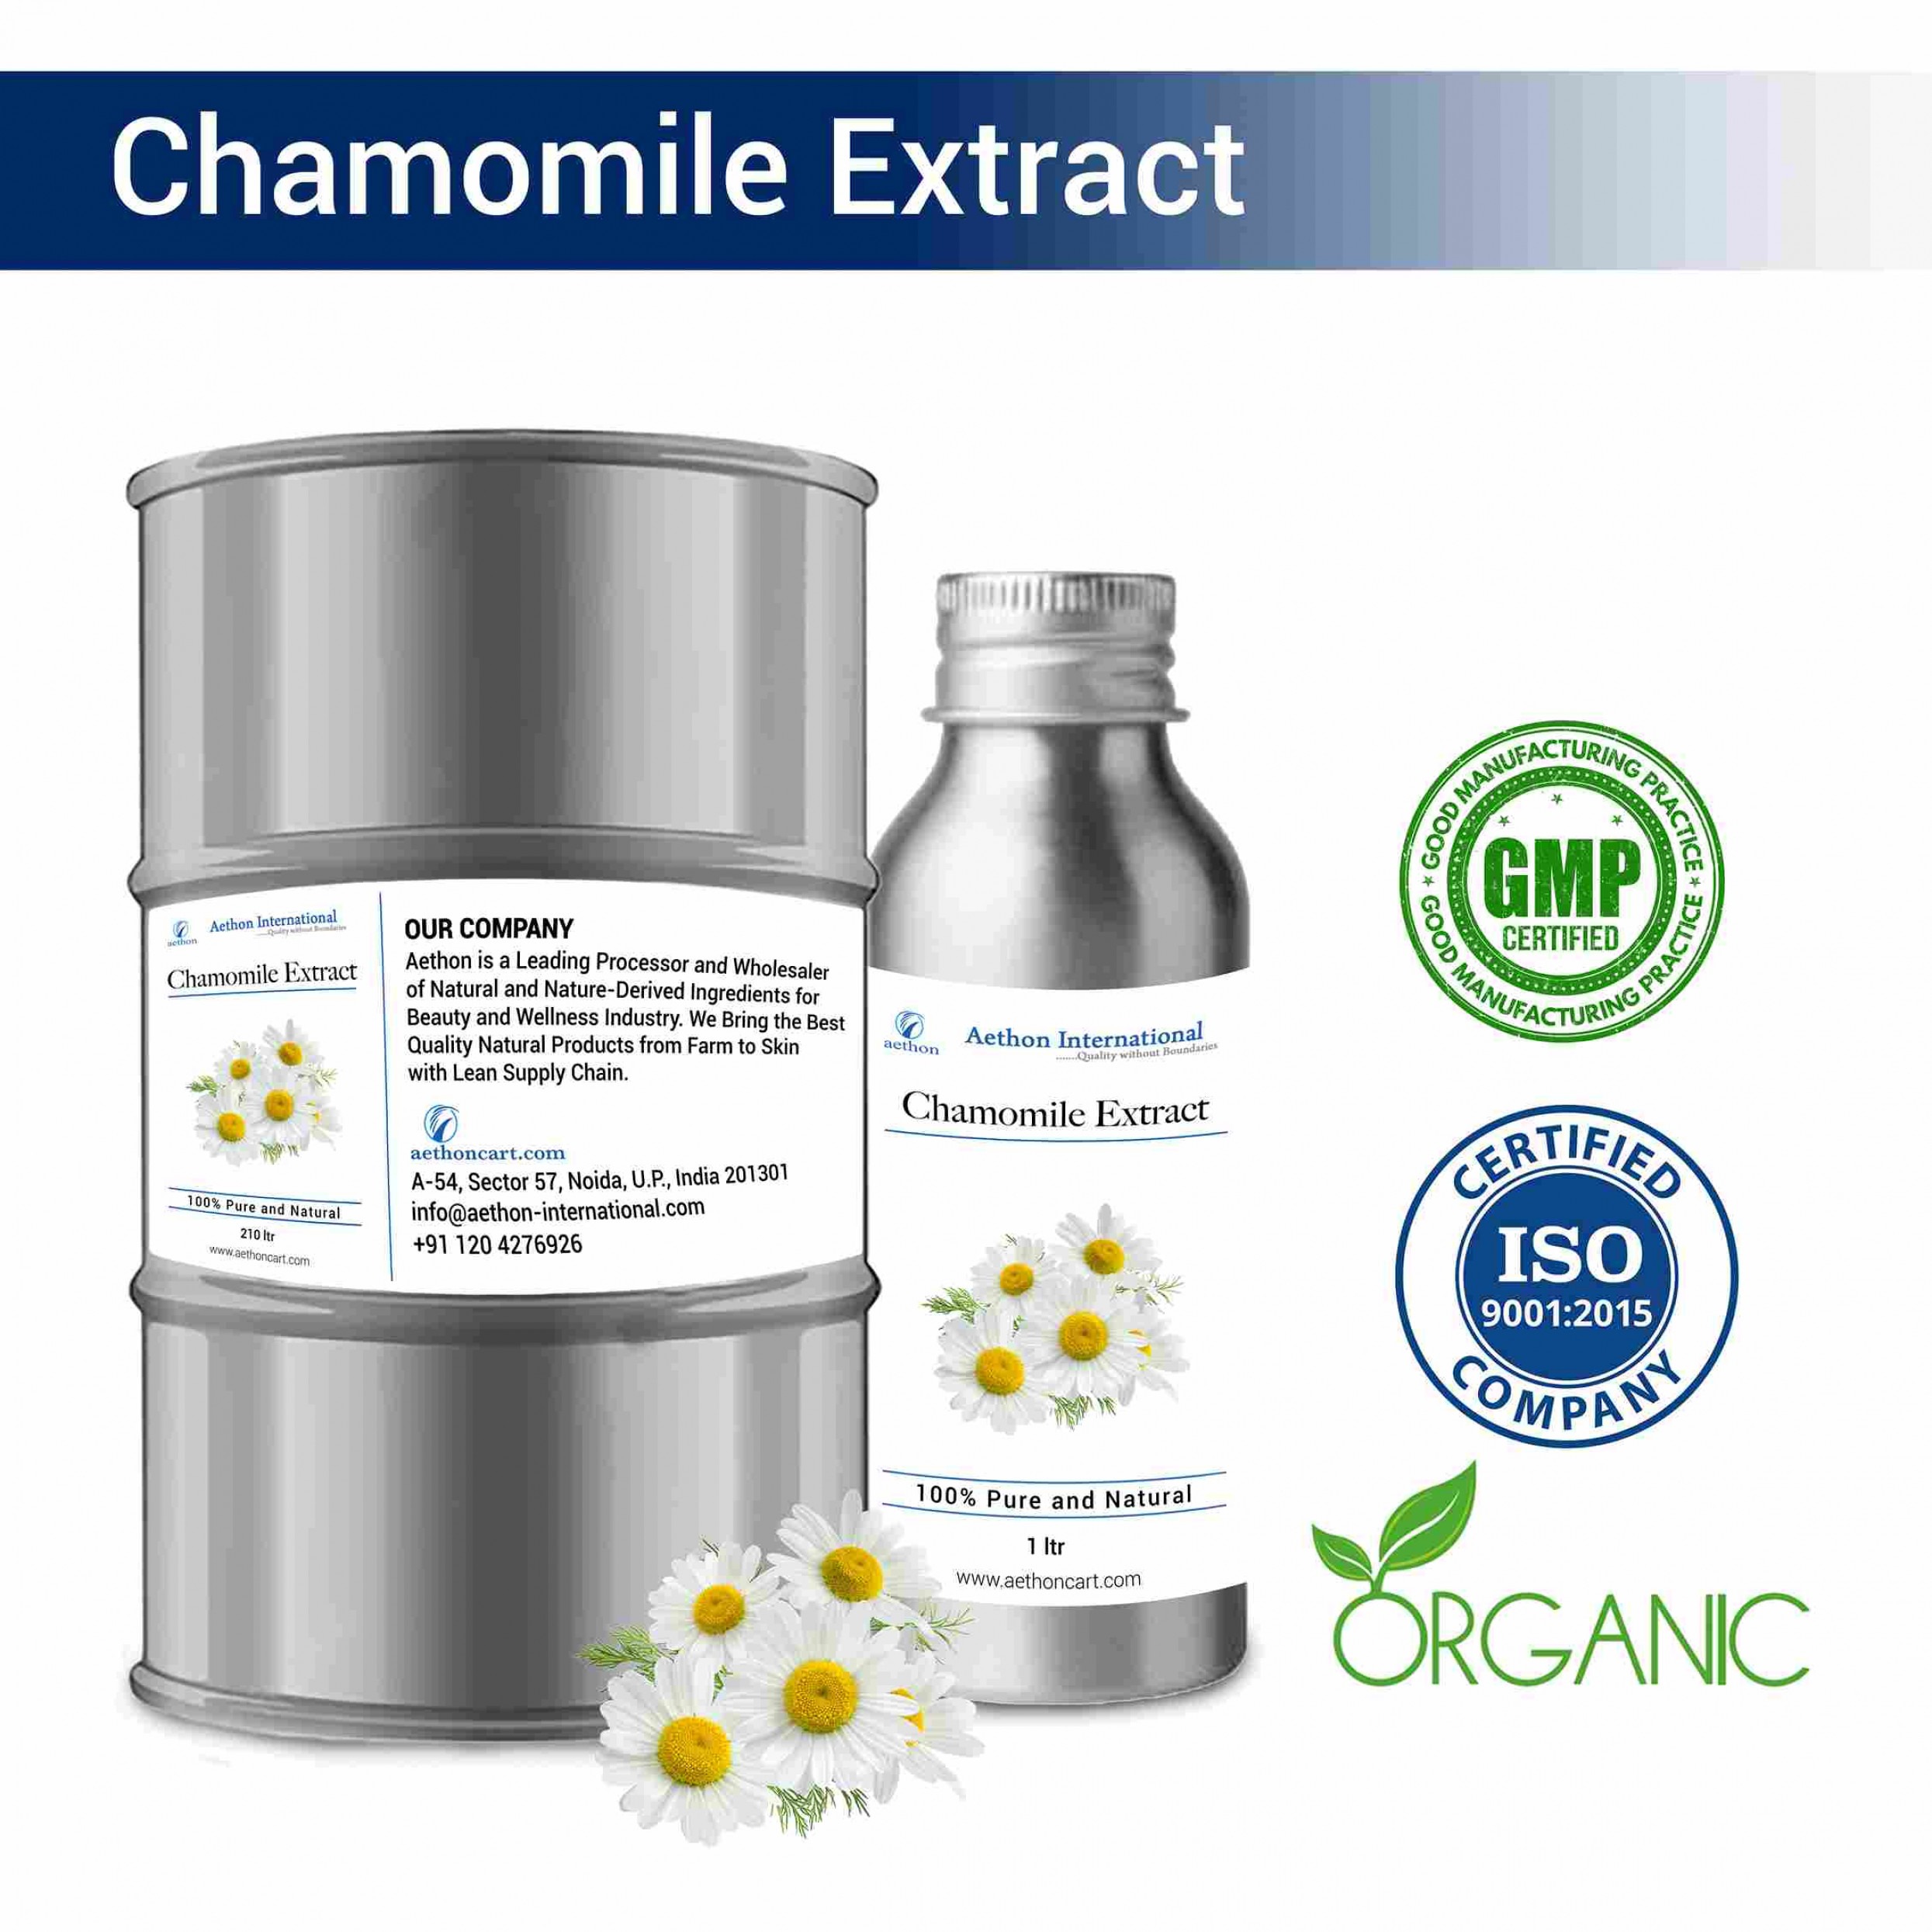 Chamomile Extract